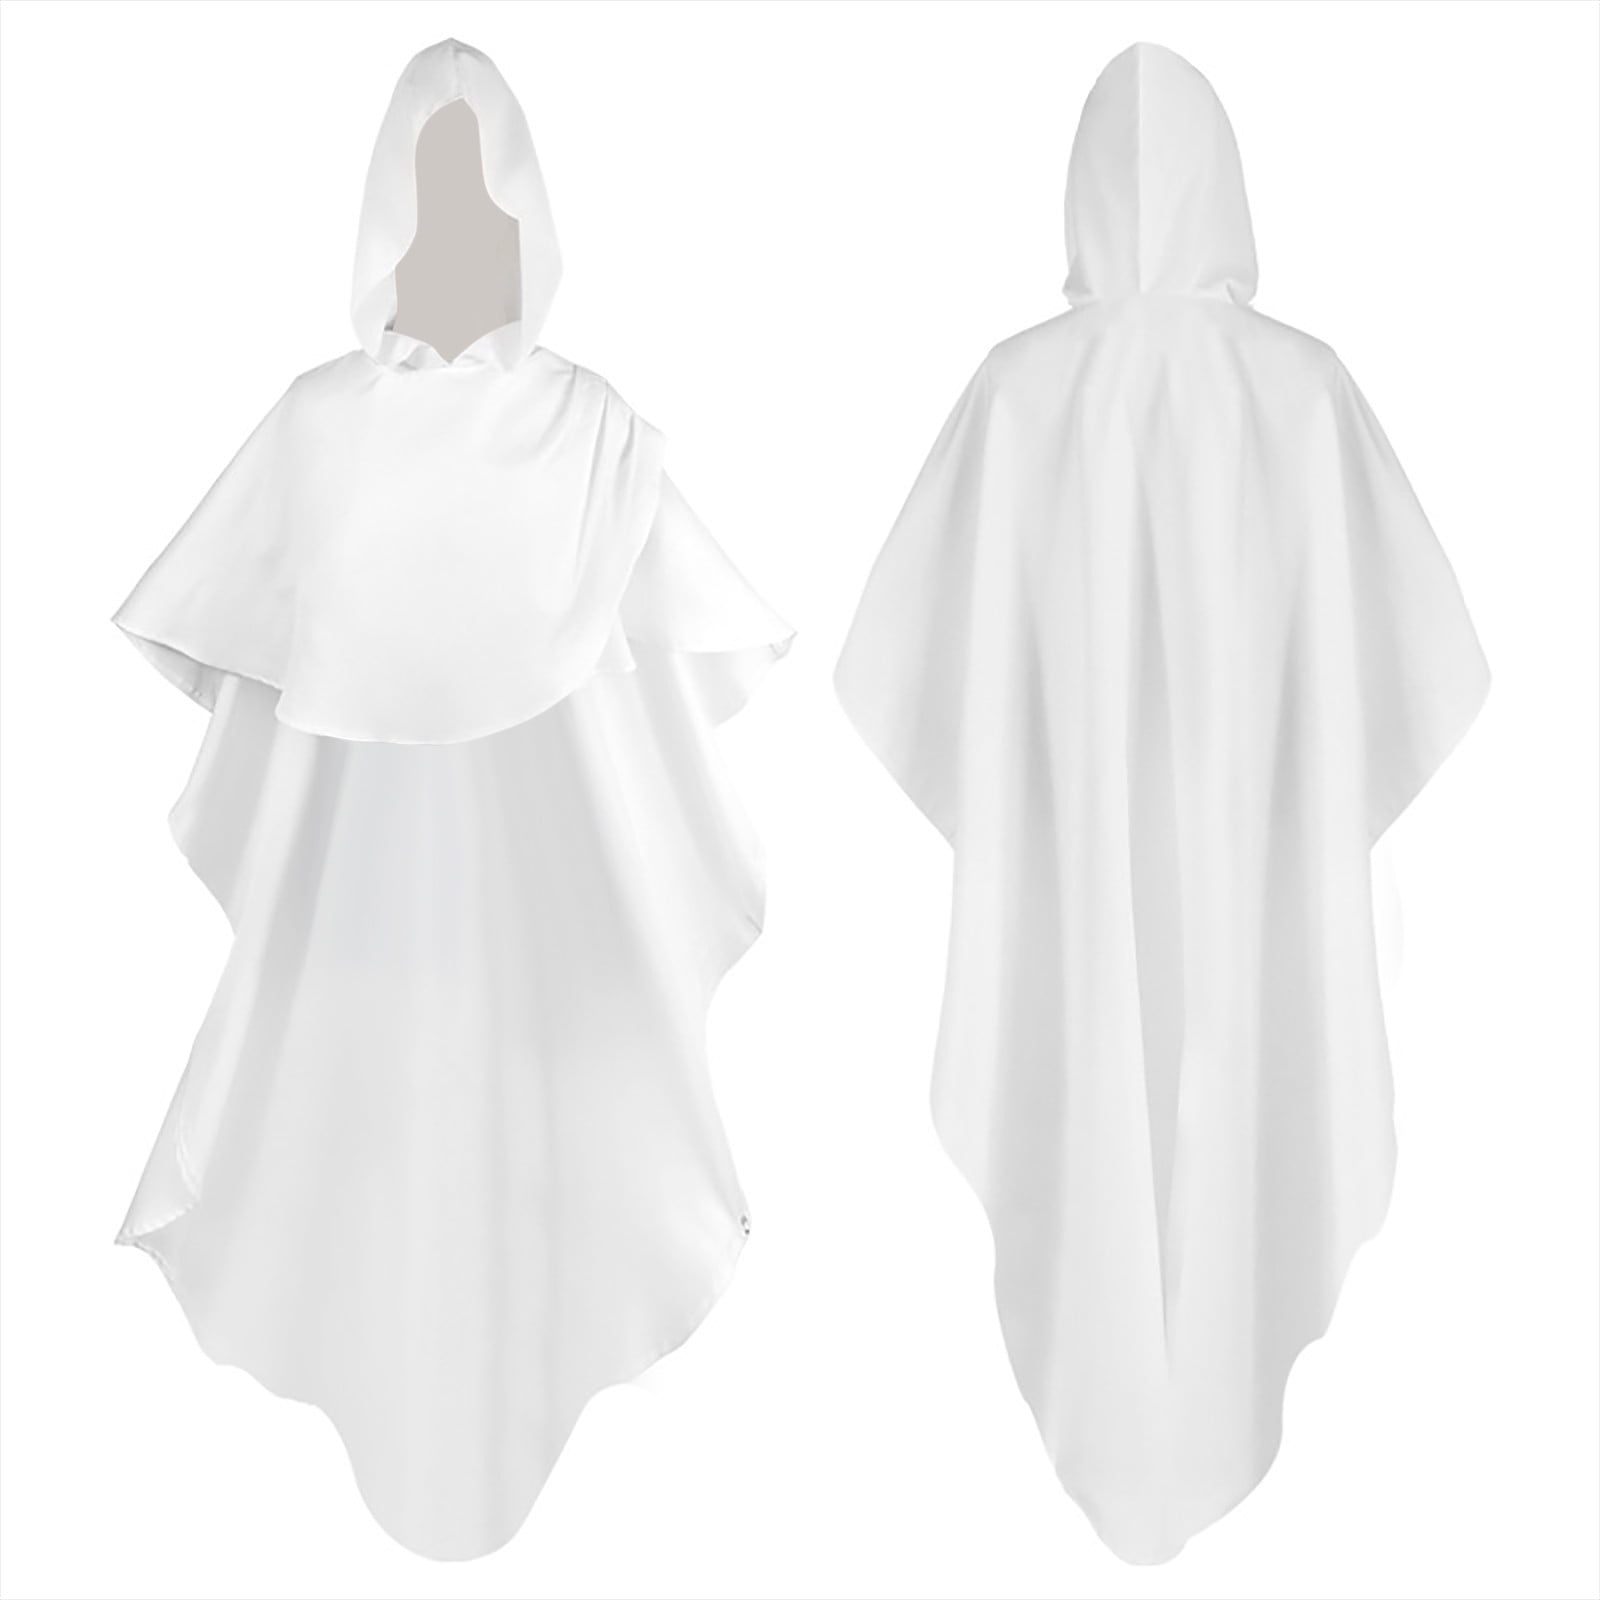 Yourumao Cloak with Hood Adult Unisex Long Hooded Cloak Solid Color ...